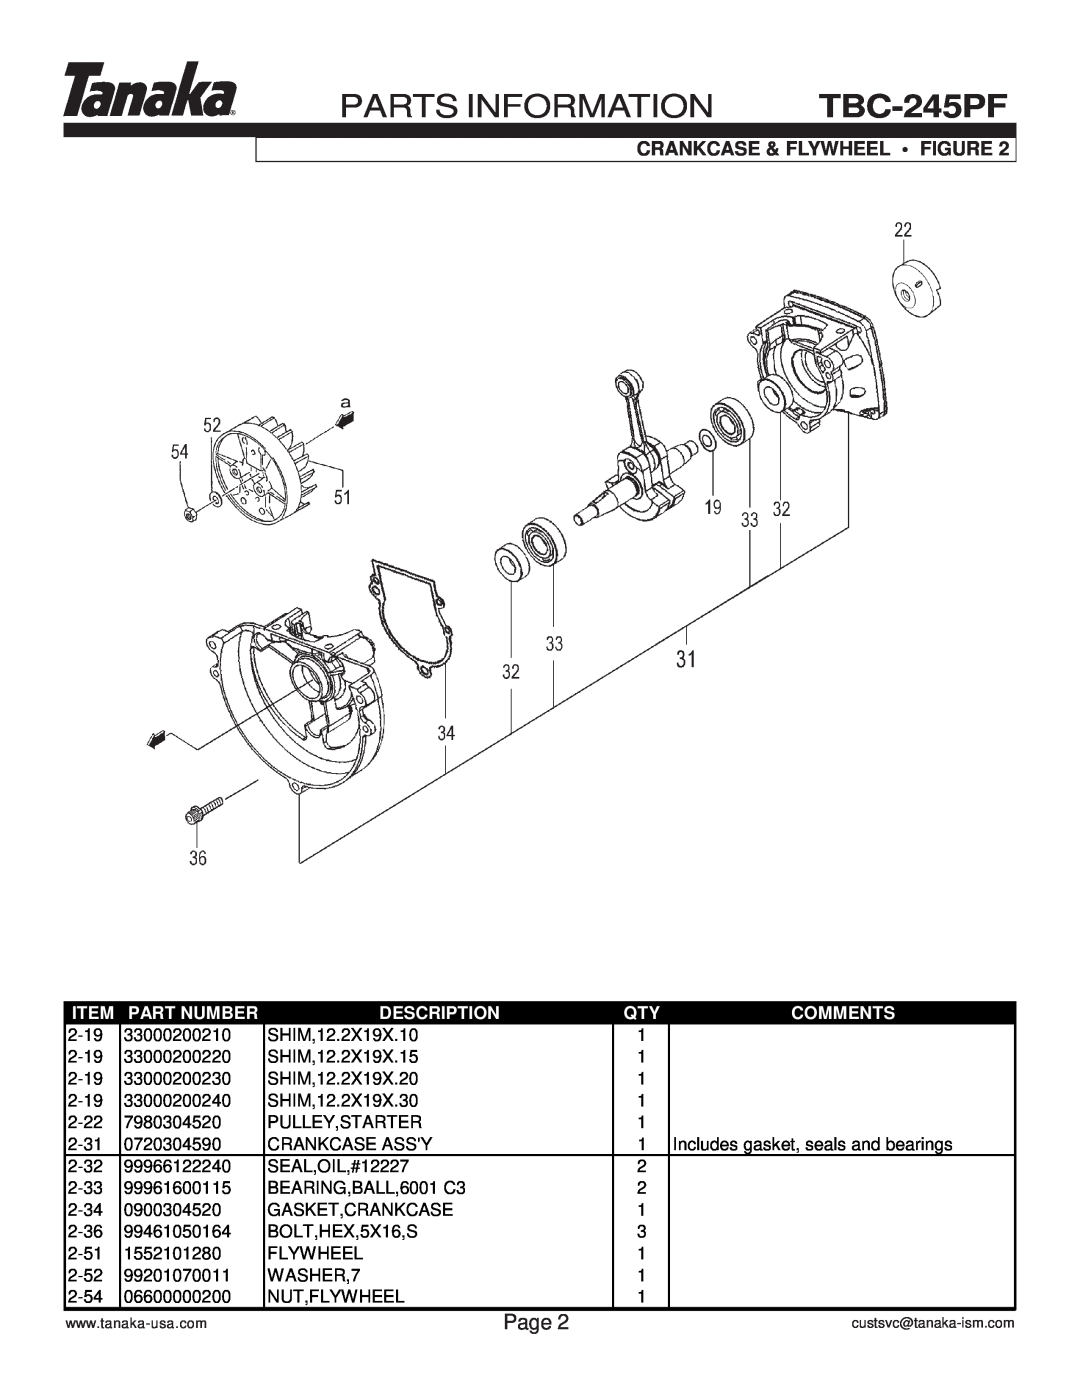 Tanaka manual PARTS INFORMATION TBC-245PF, Crankcase & Flywheel Figure, Page, Part Number, Description, Comments 